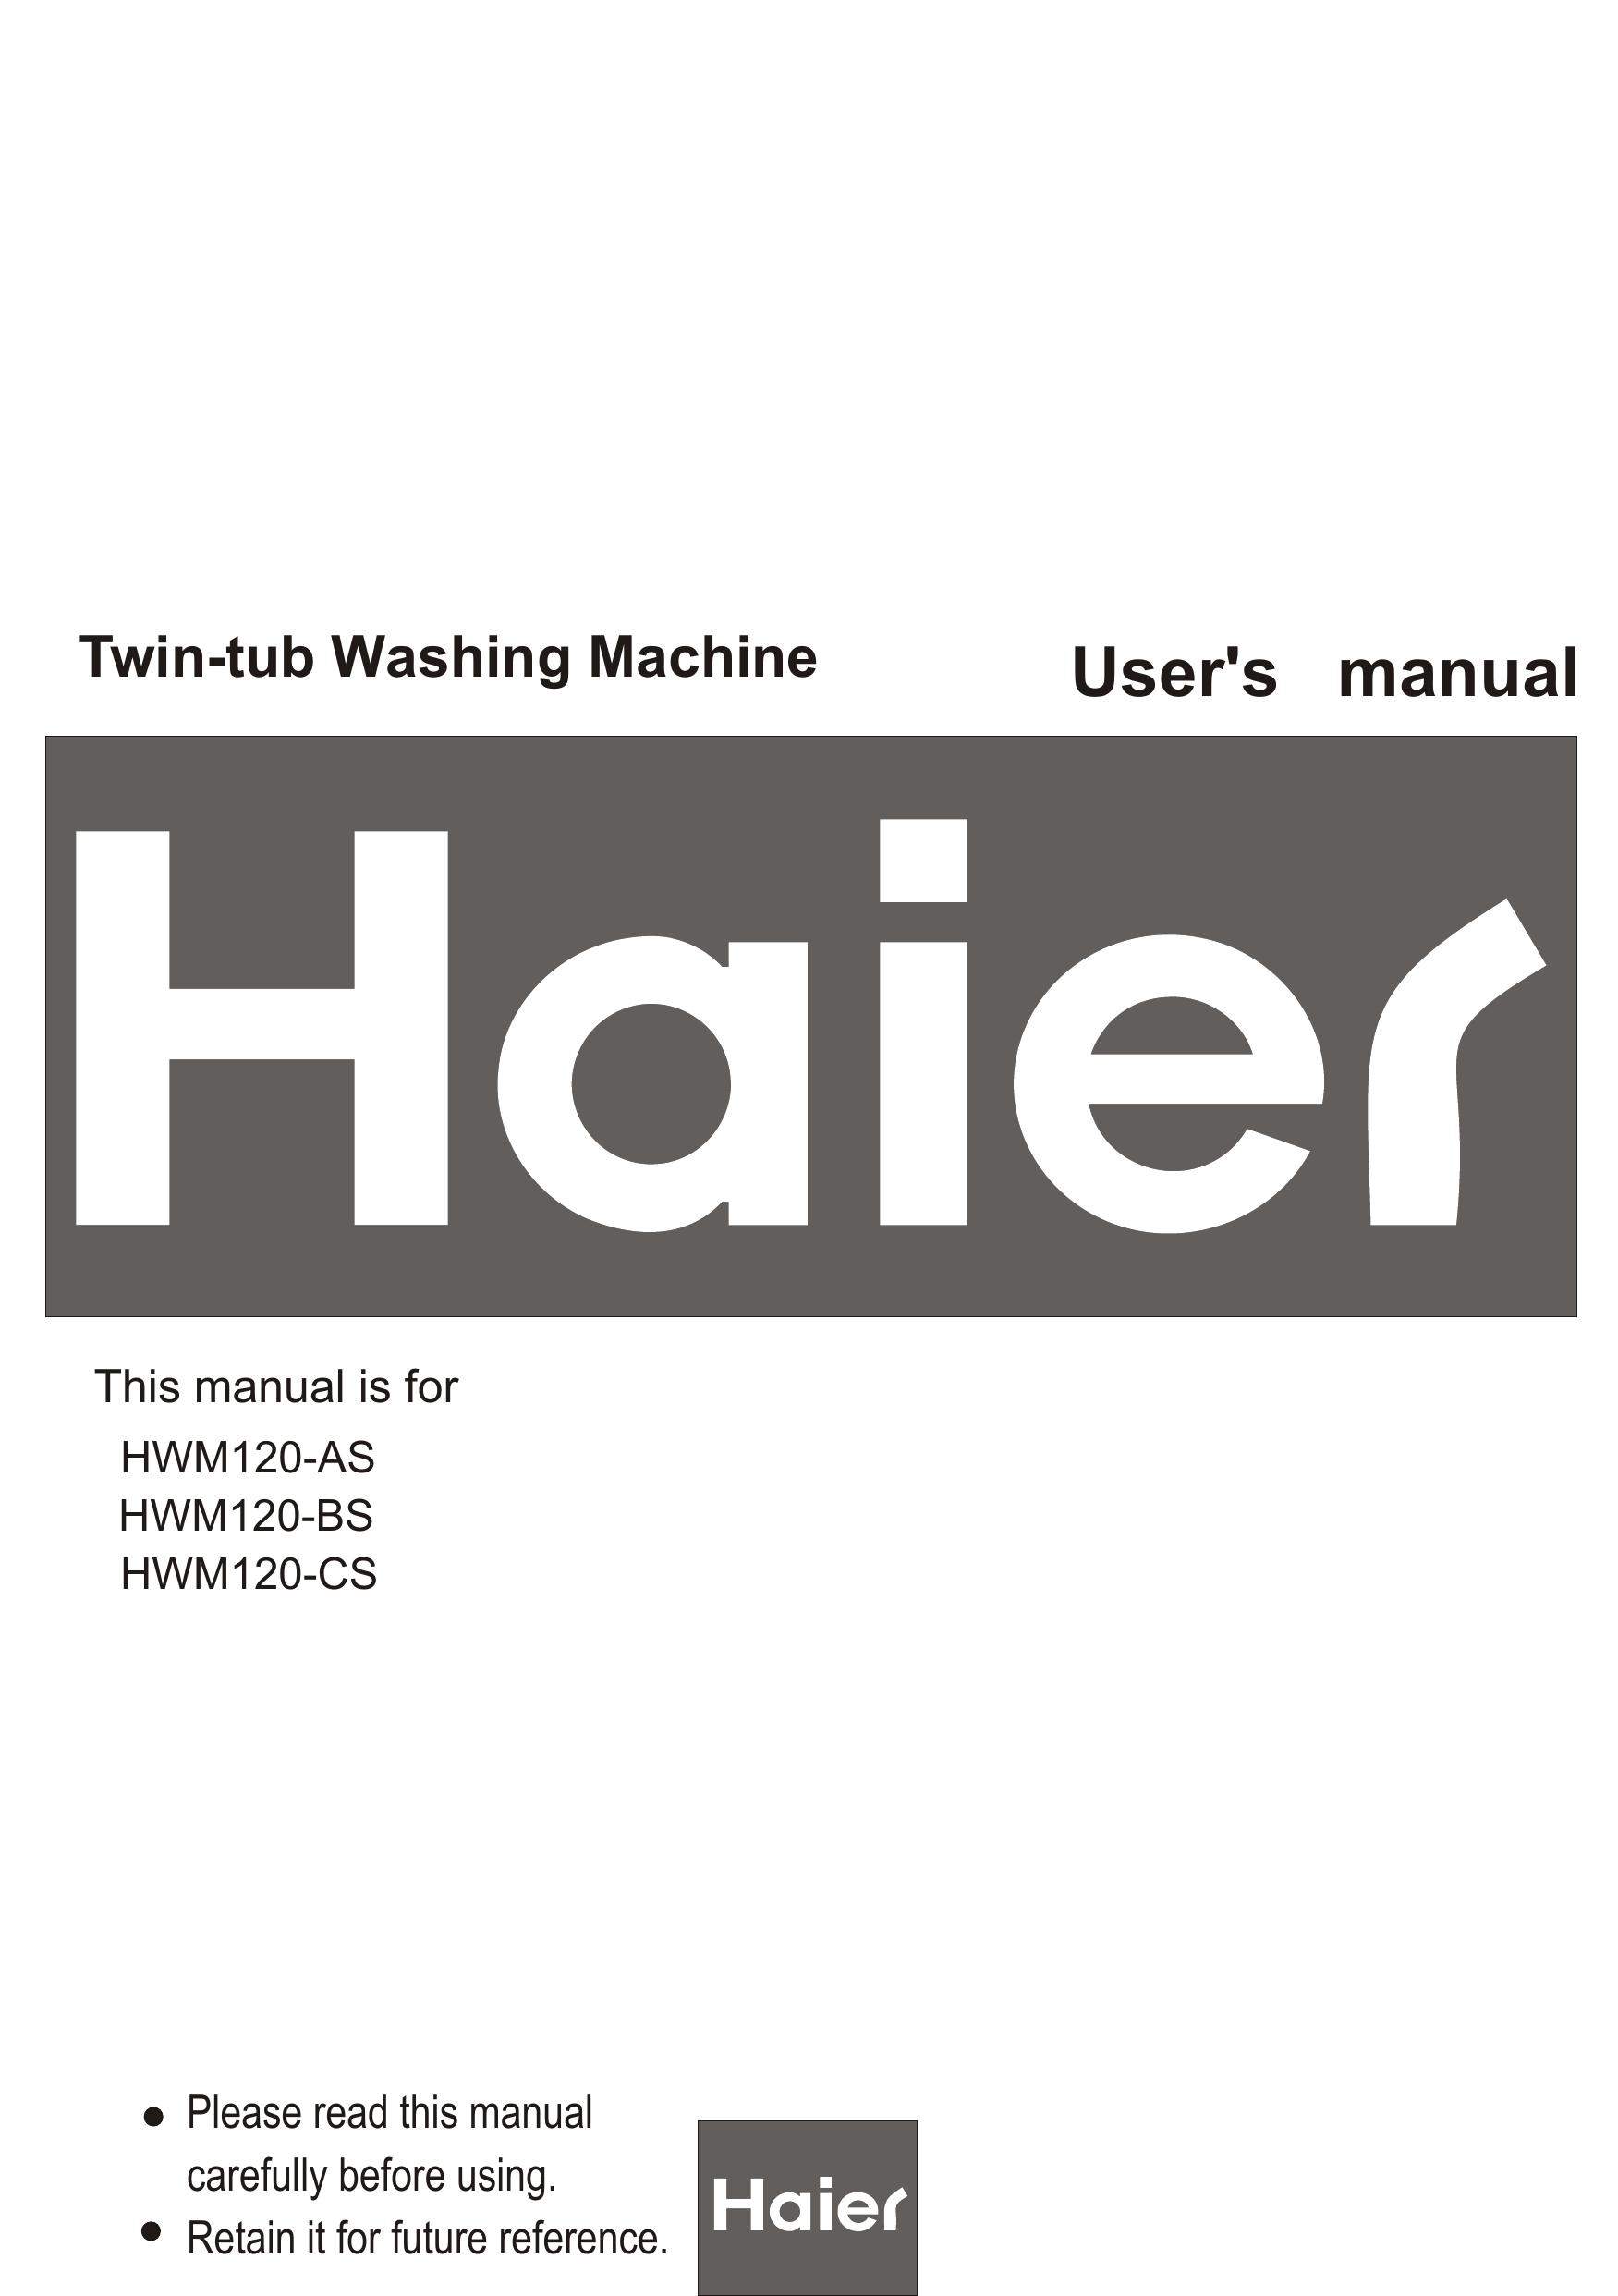 Haier HWM120-CS Washer/Dryer User Manual